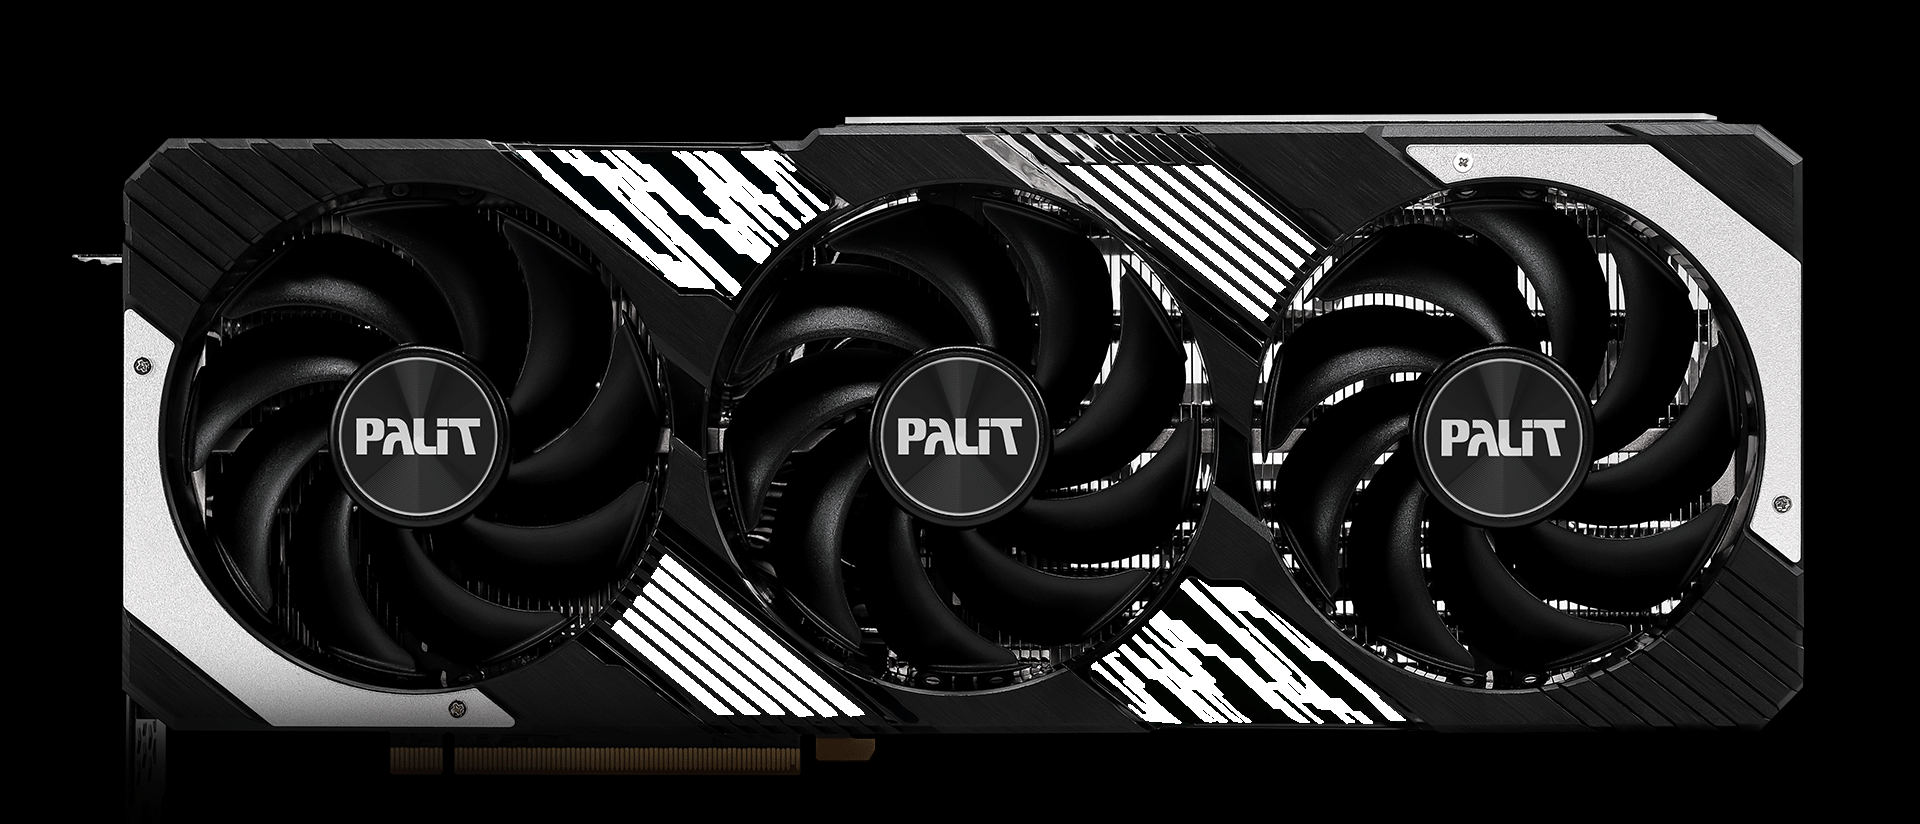 Palit Products - GeForce RTX™ 2080 Ti GamingPro OC 